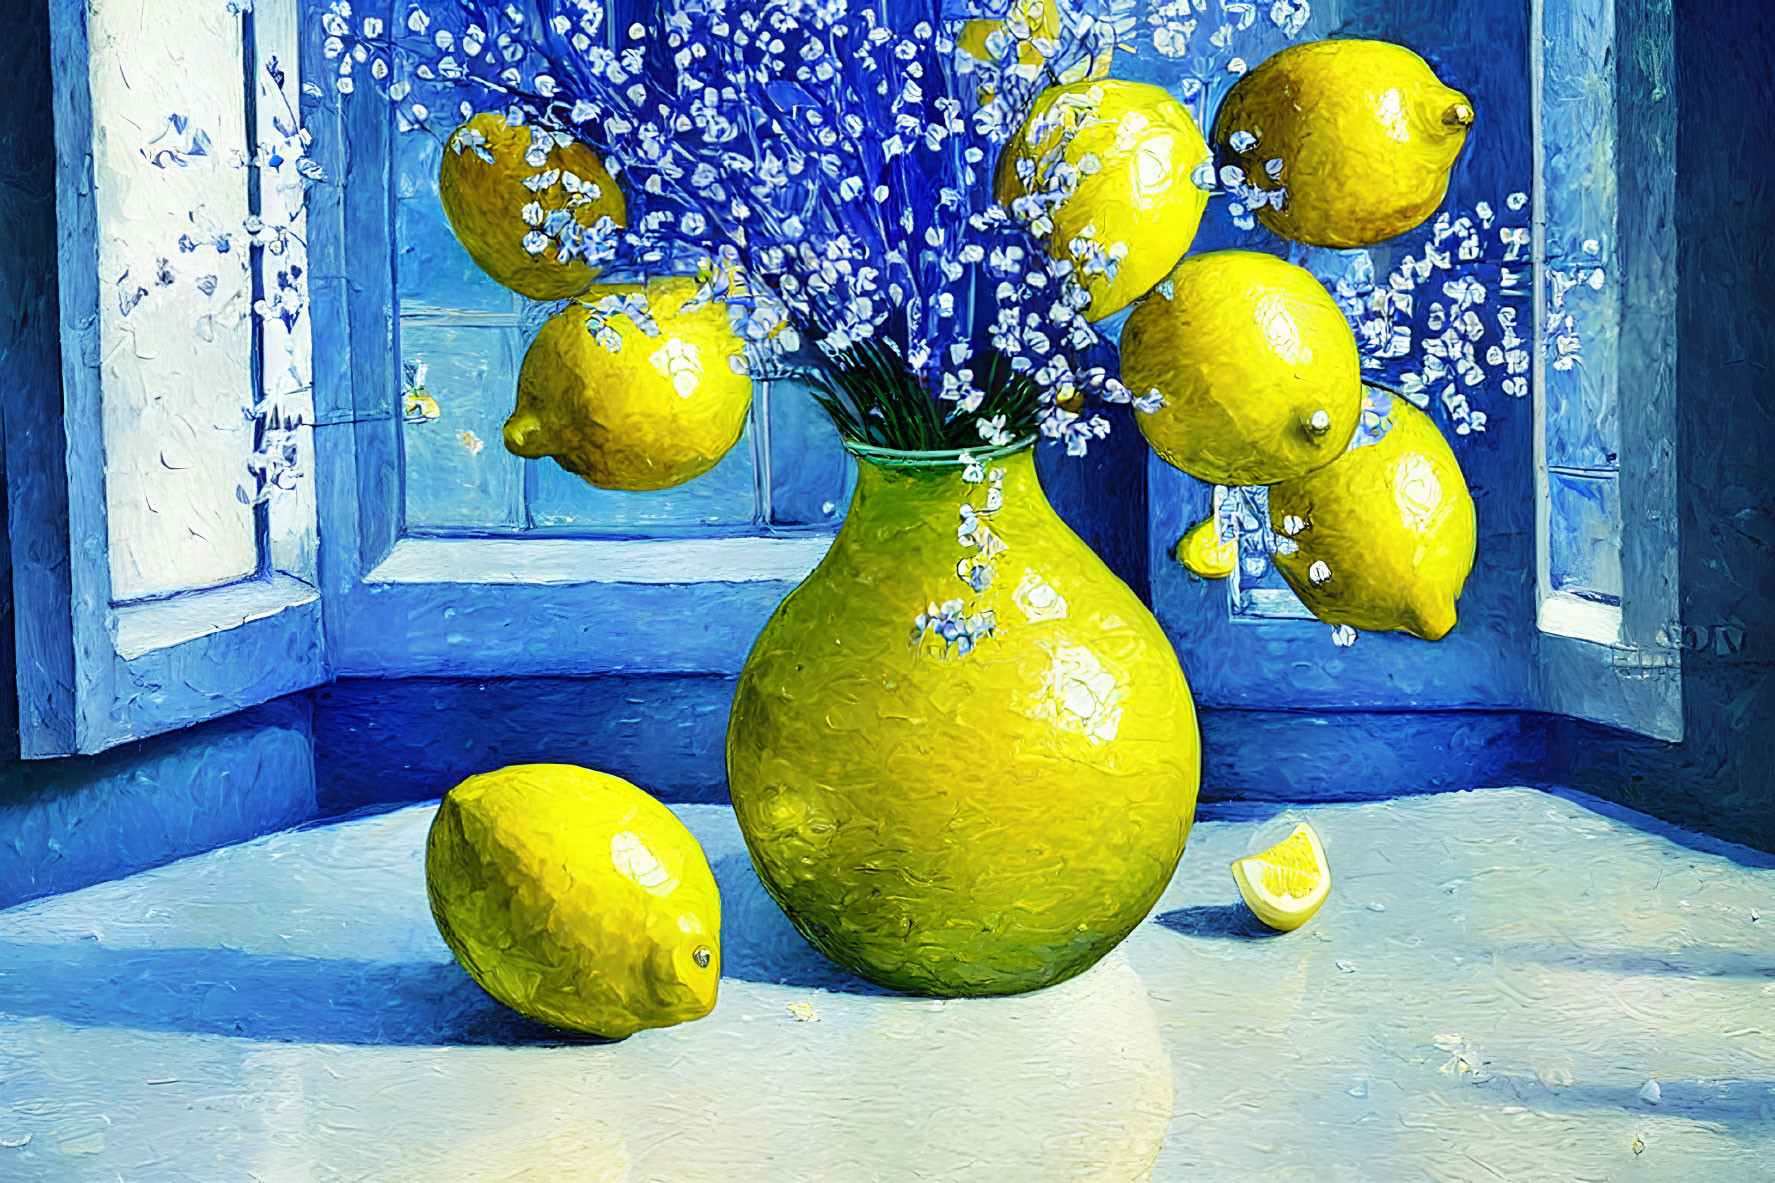 Bright Yellow Lemons and Blue Flowers on Windowsill in Sunlight